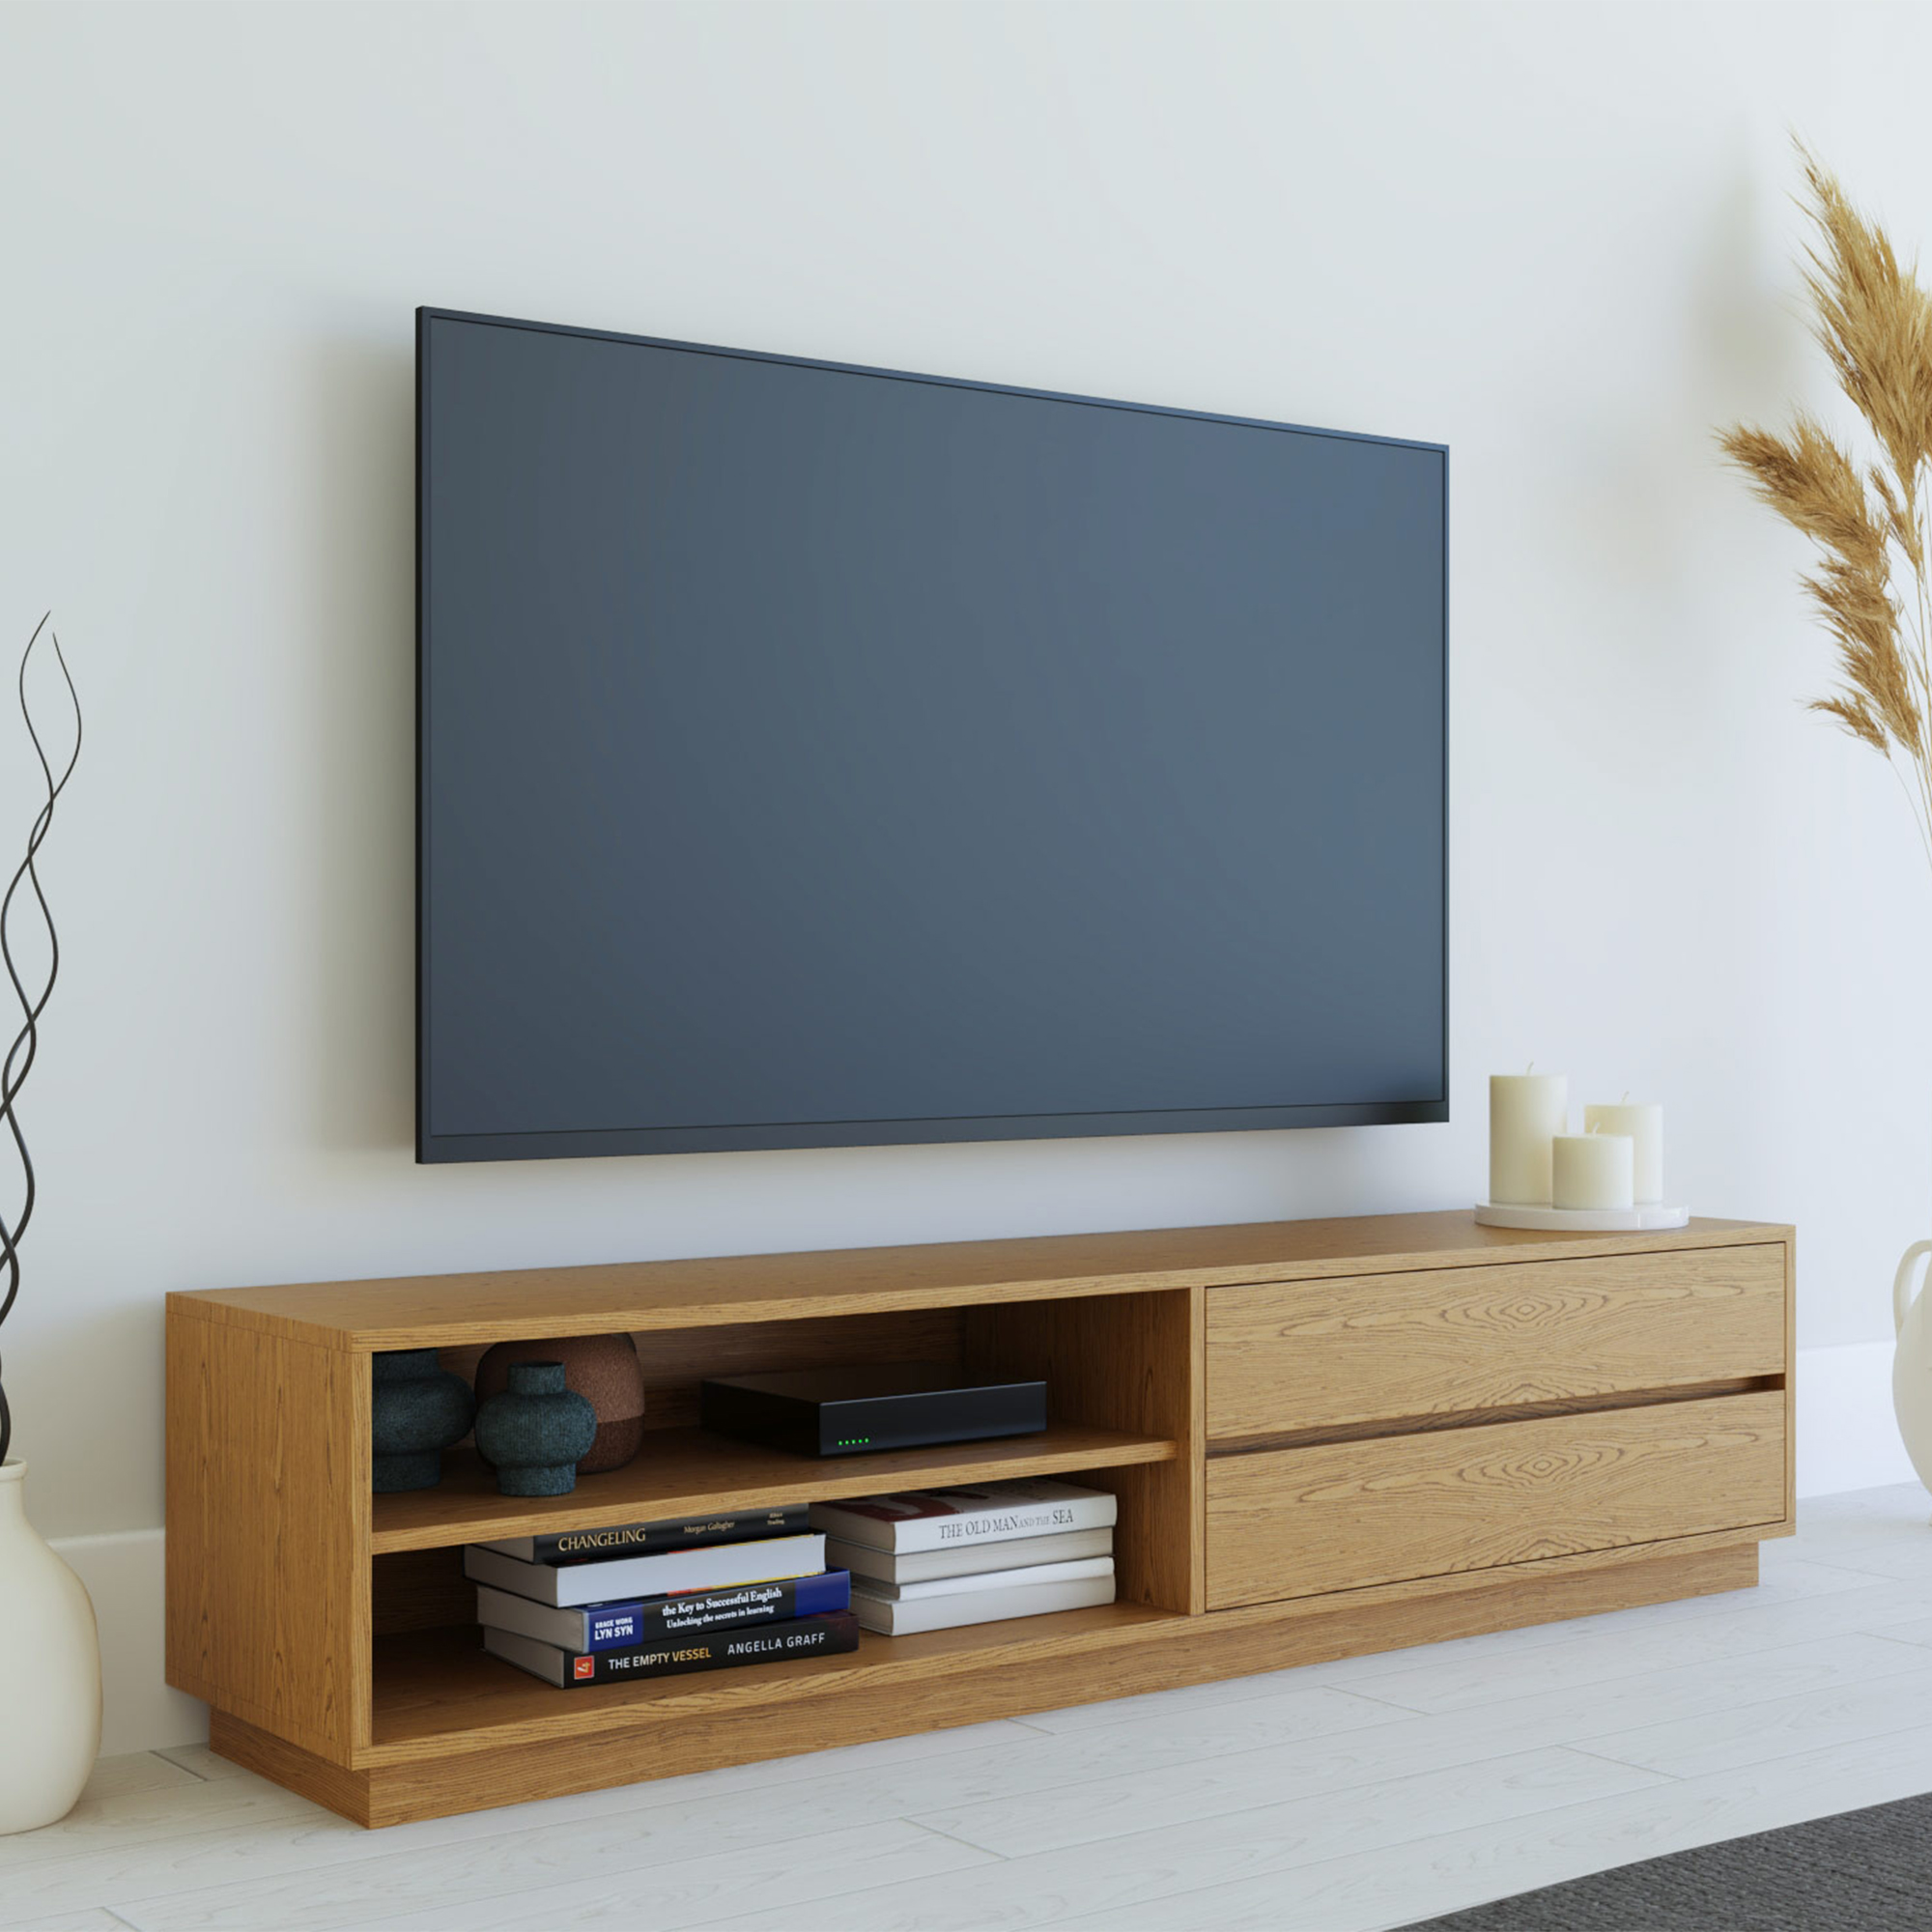 Meuble TV design 2 tiroirs en bois couleur chêne